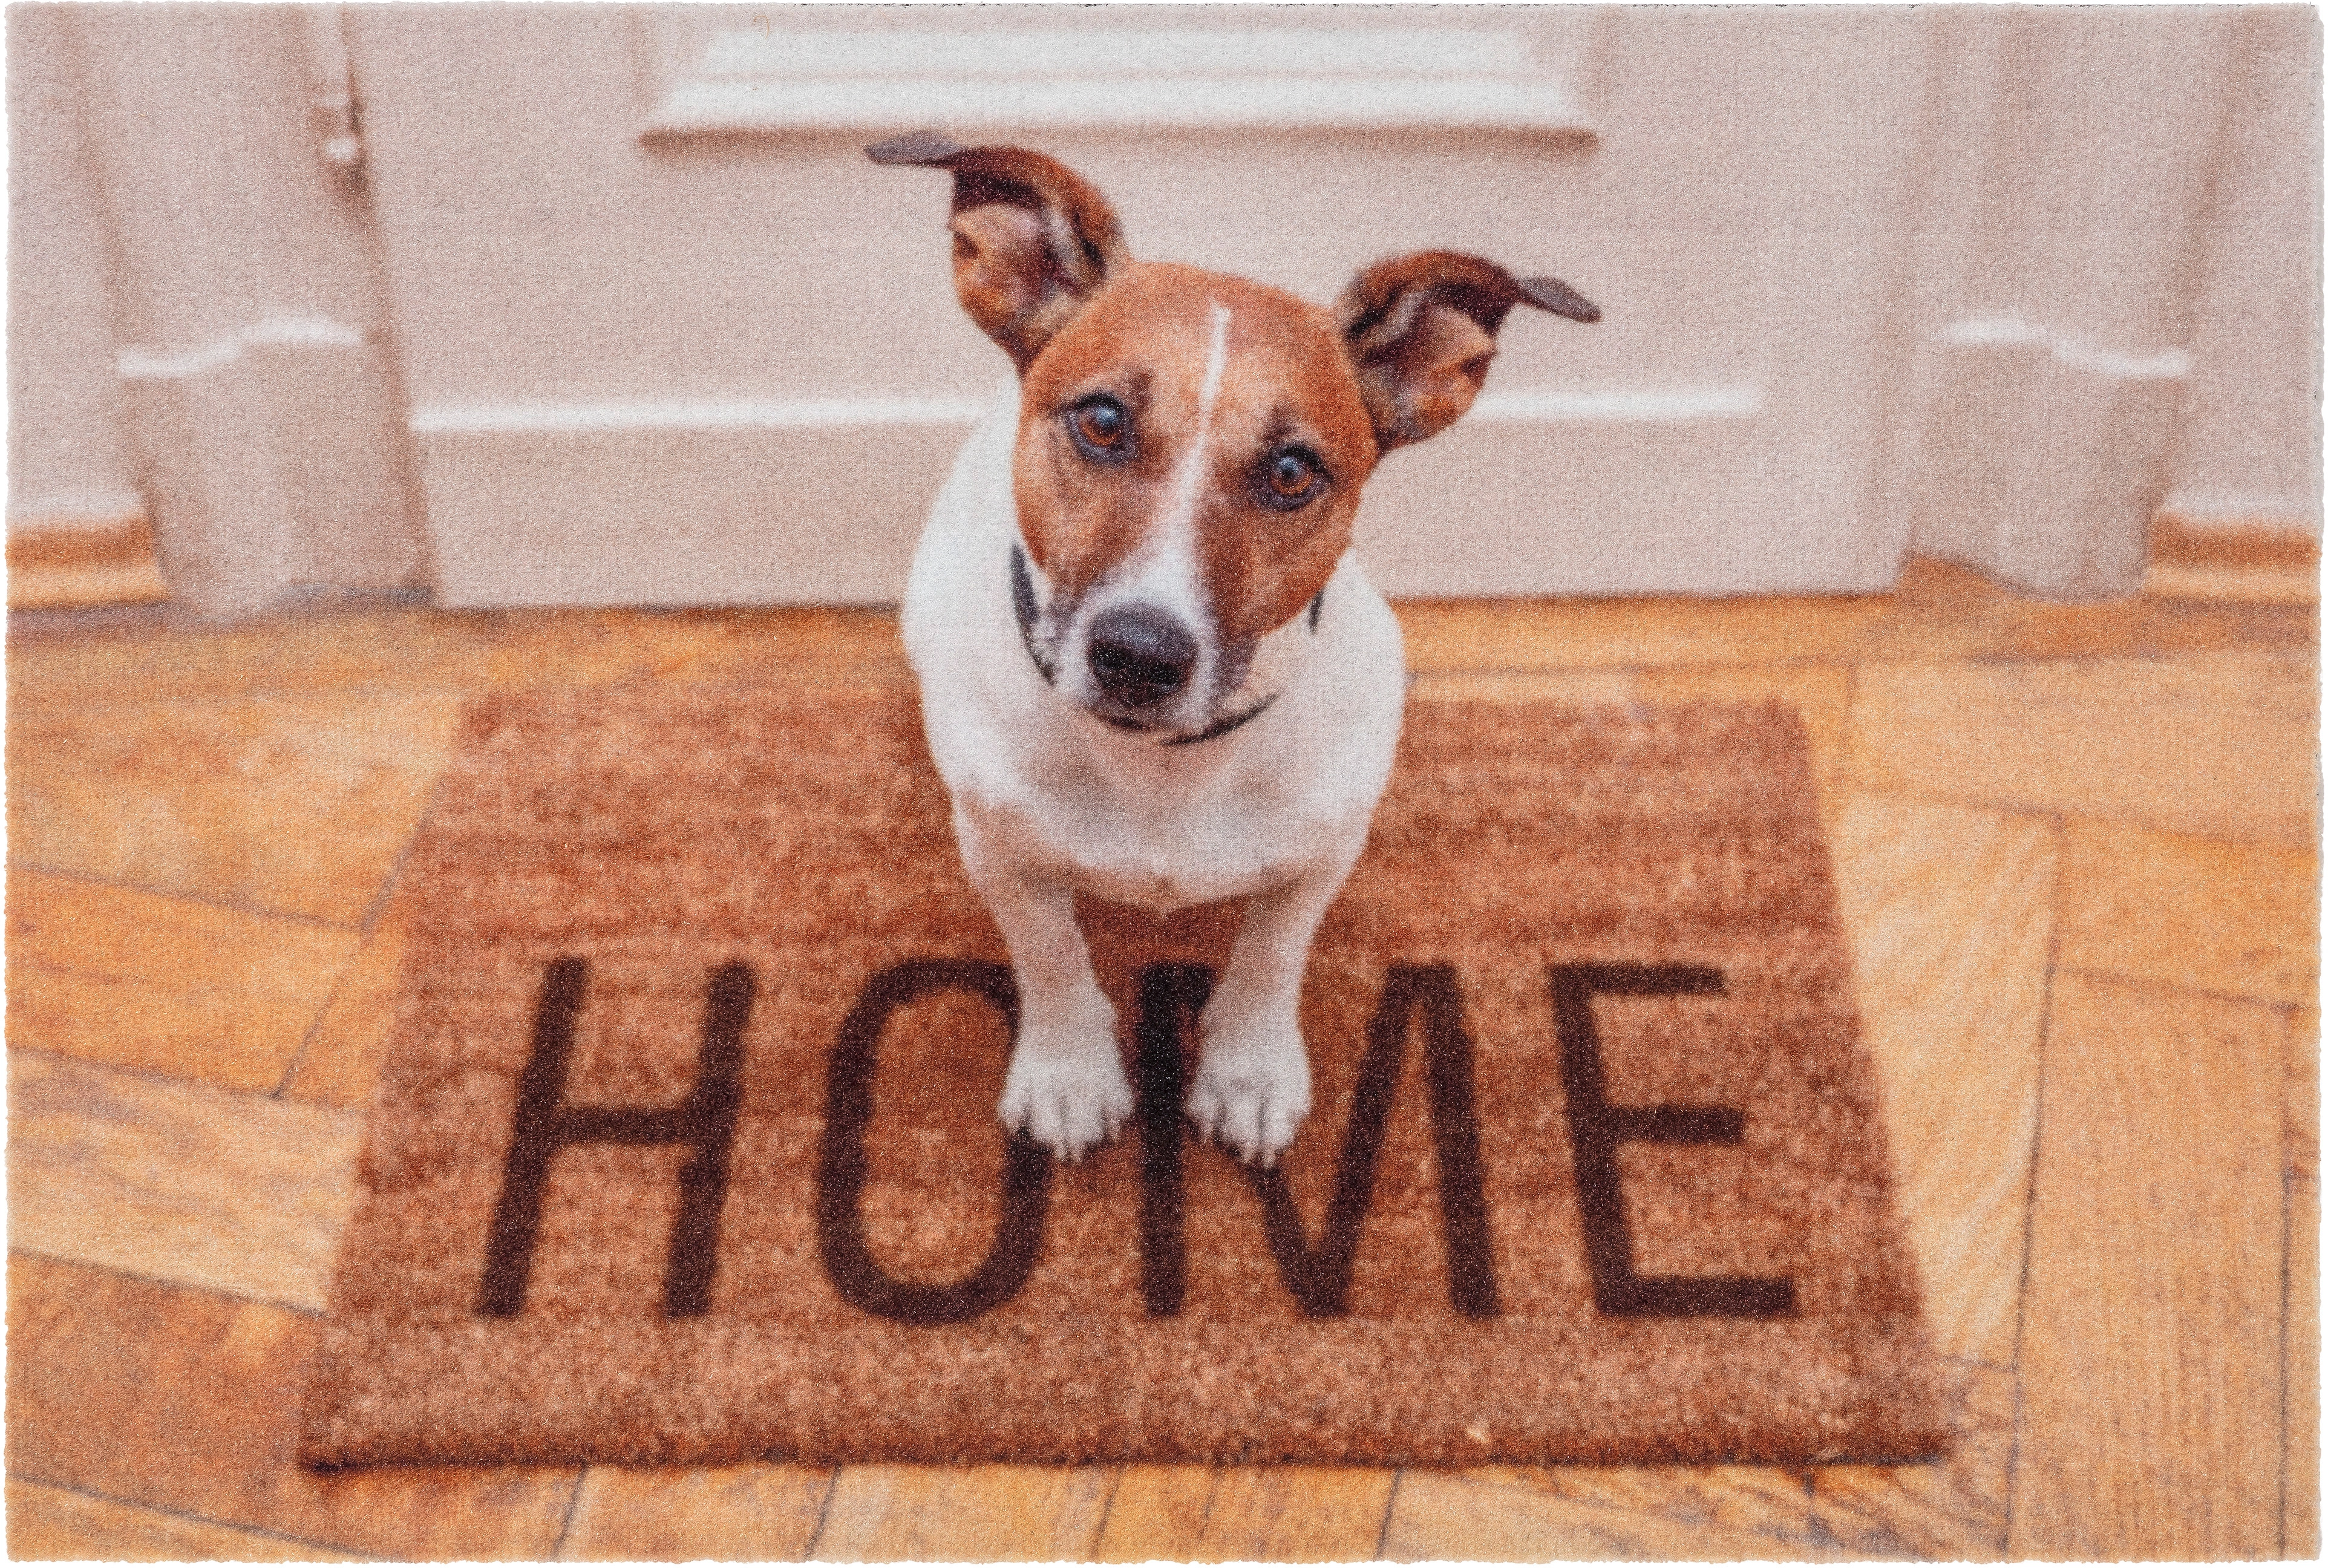 Astra Sauberlaufmatte Deco Print 40 x 60 cm Hund Home kaufen bei OBI